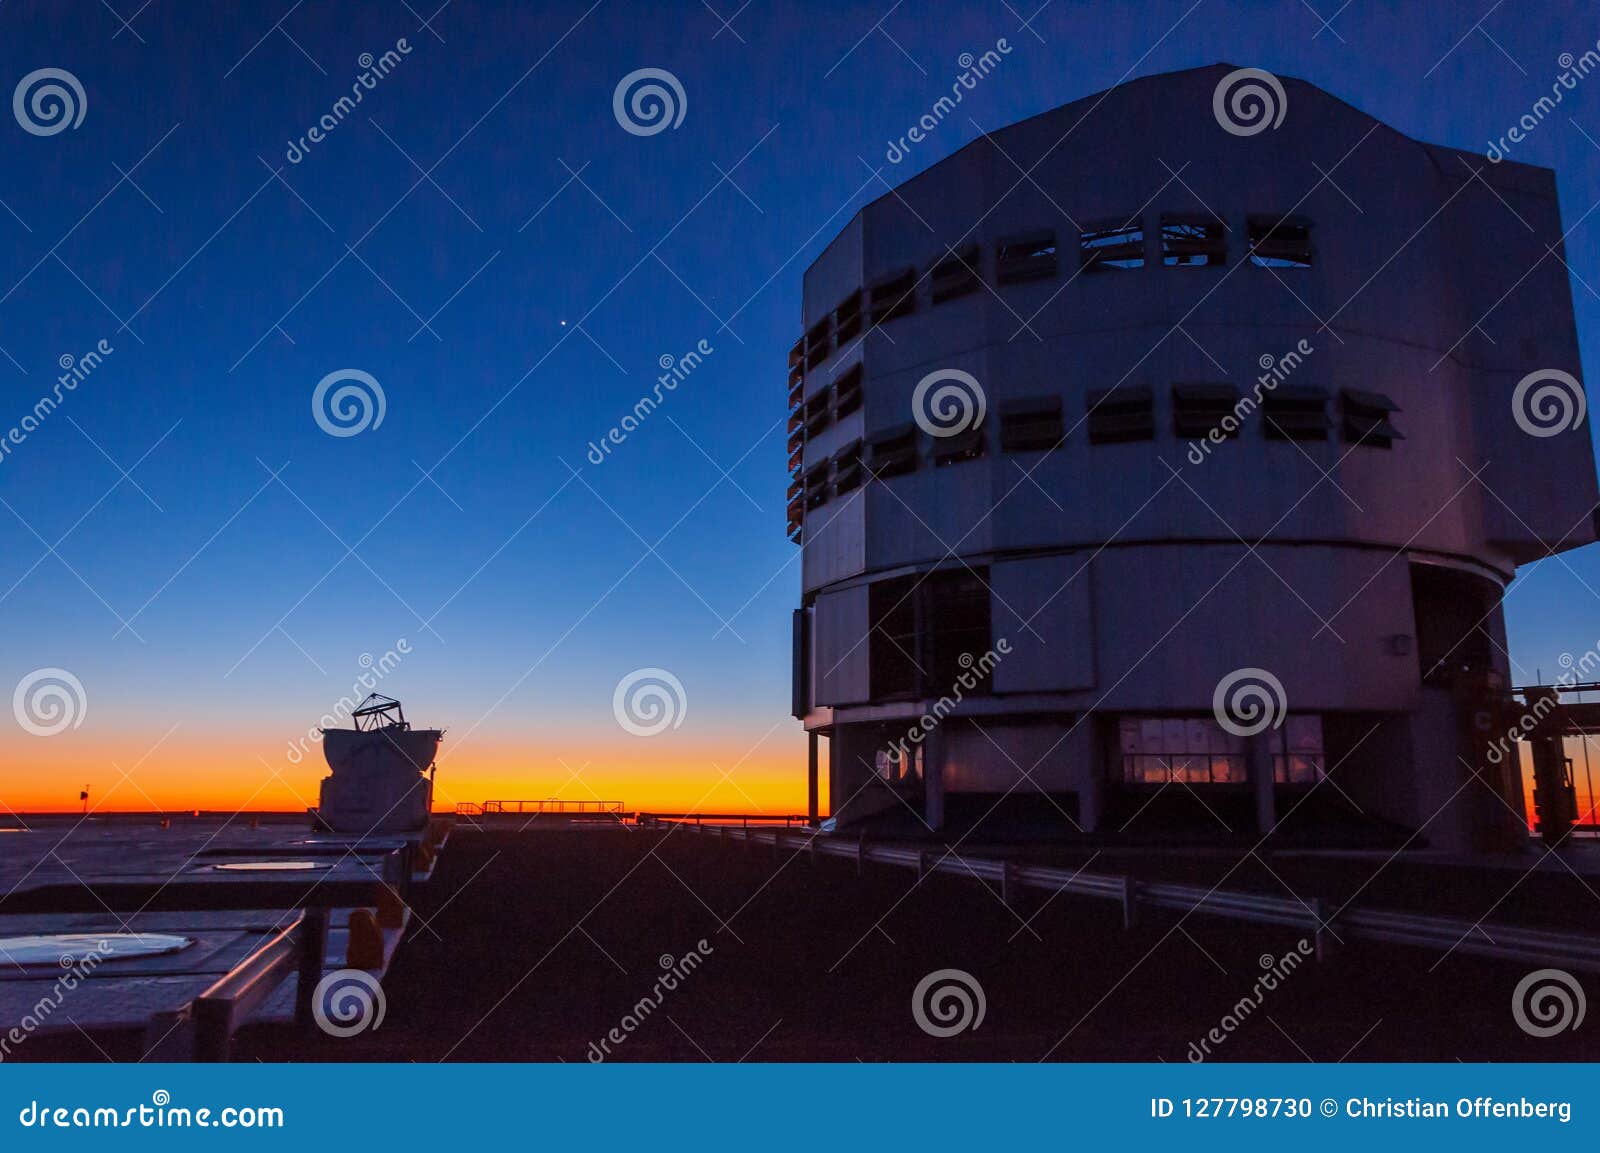 cerro paranal eso observatory